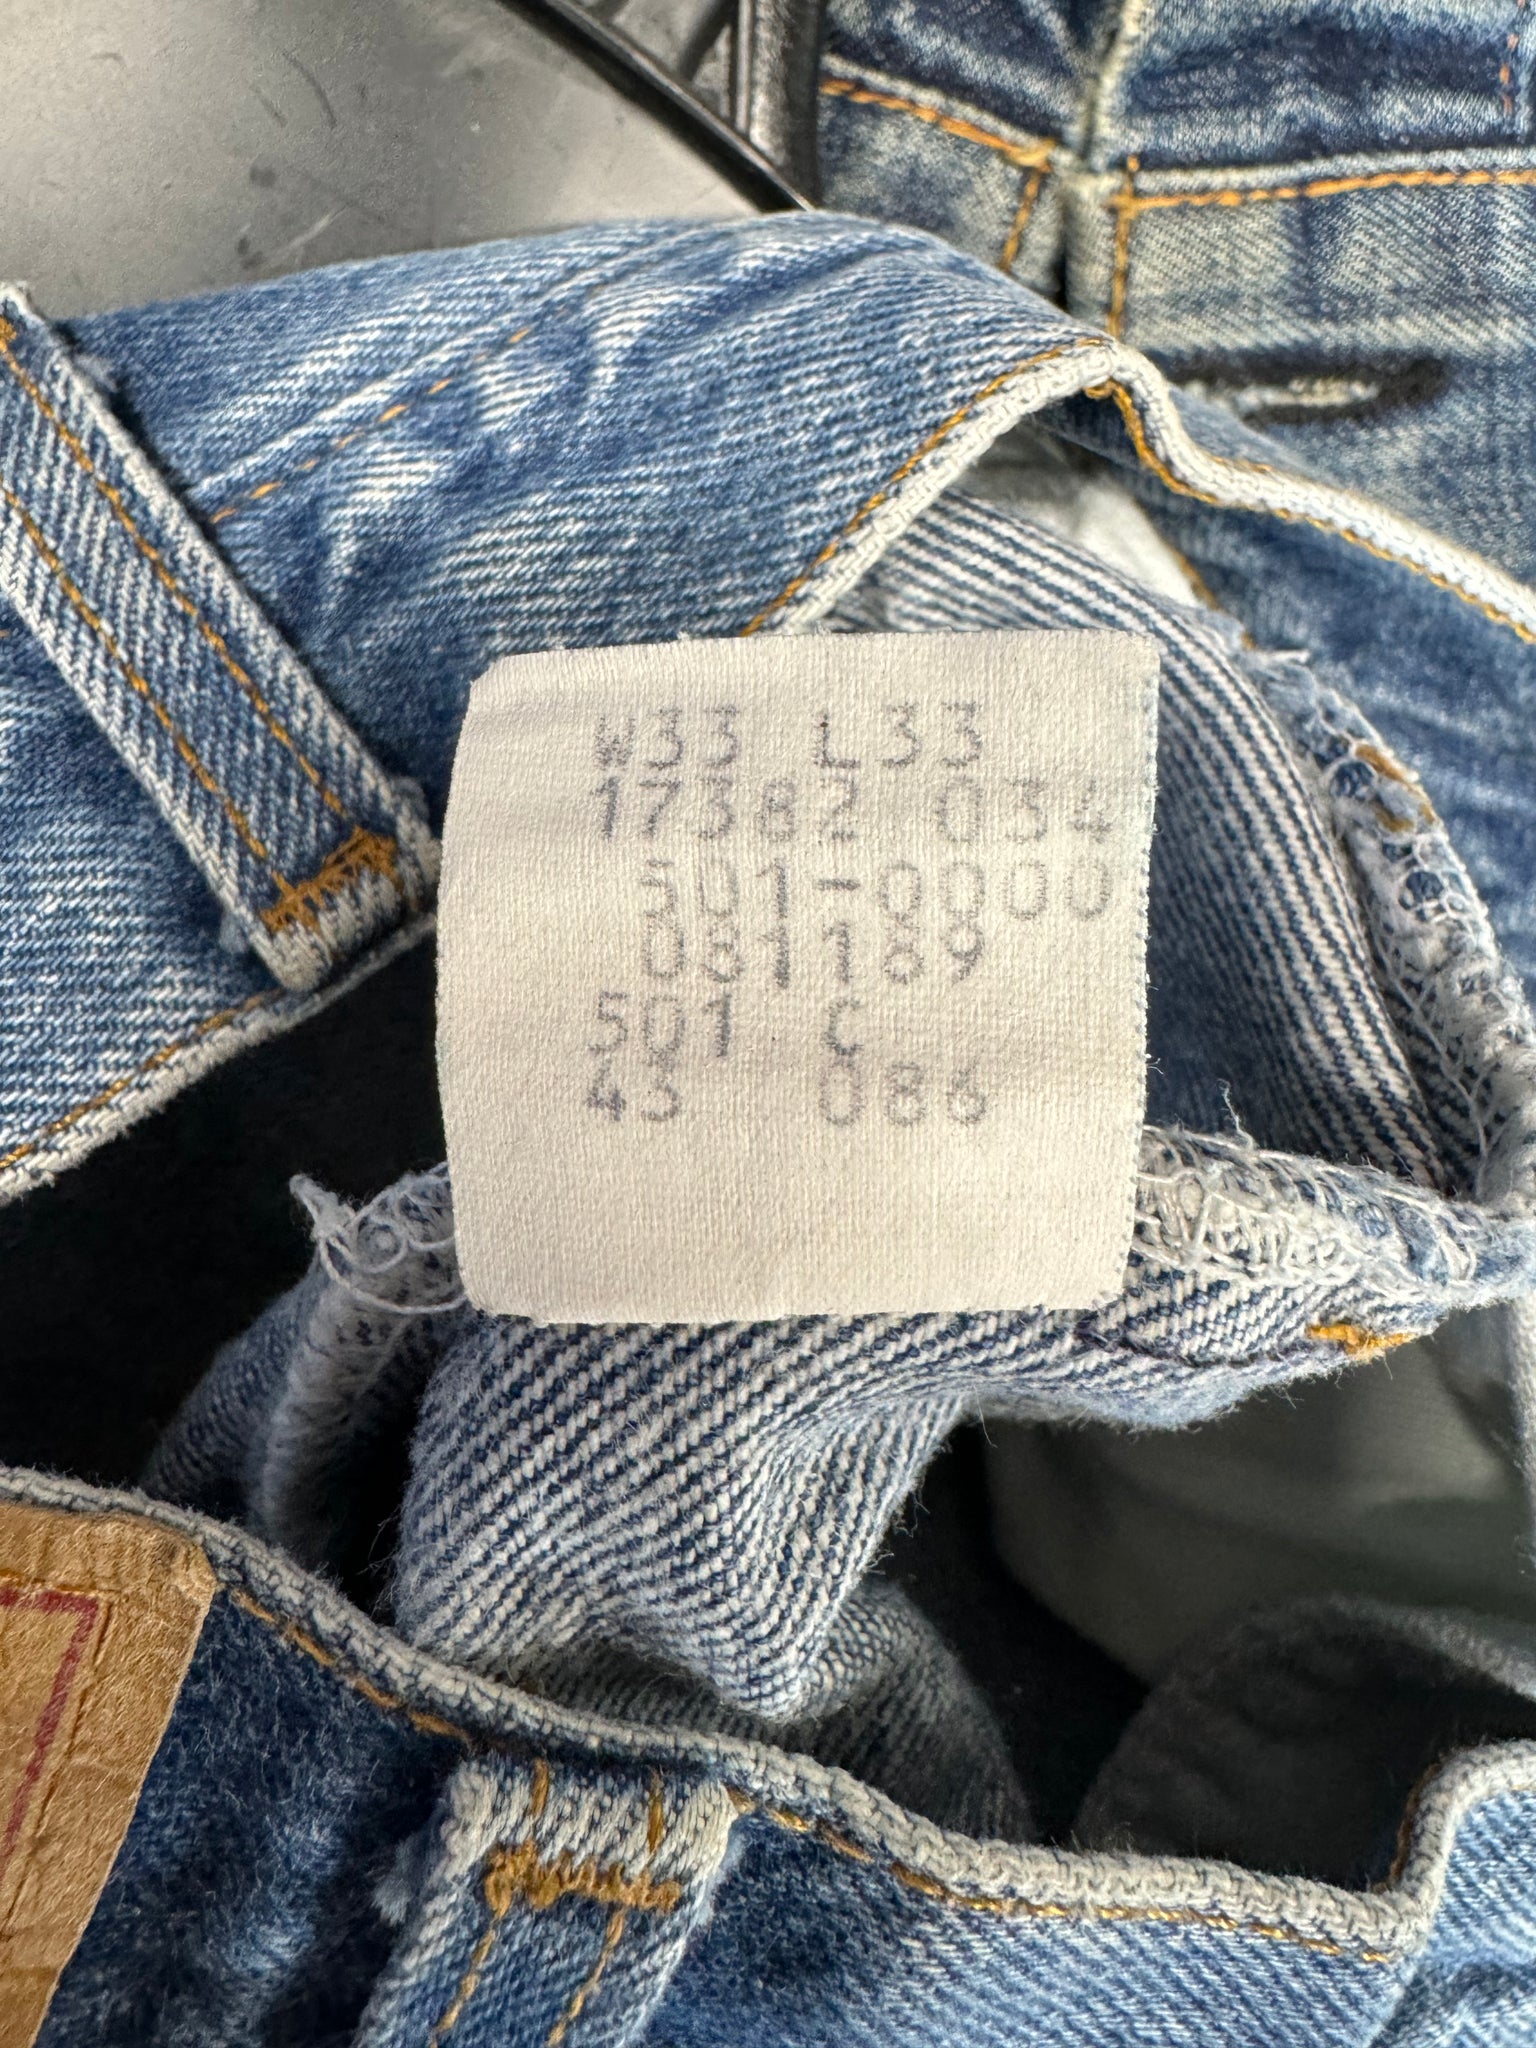 Vintage USA Transitional Levi's 501 Shrink to Fit Jeans (JYJ0124-067)